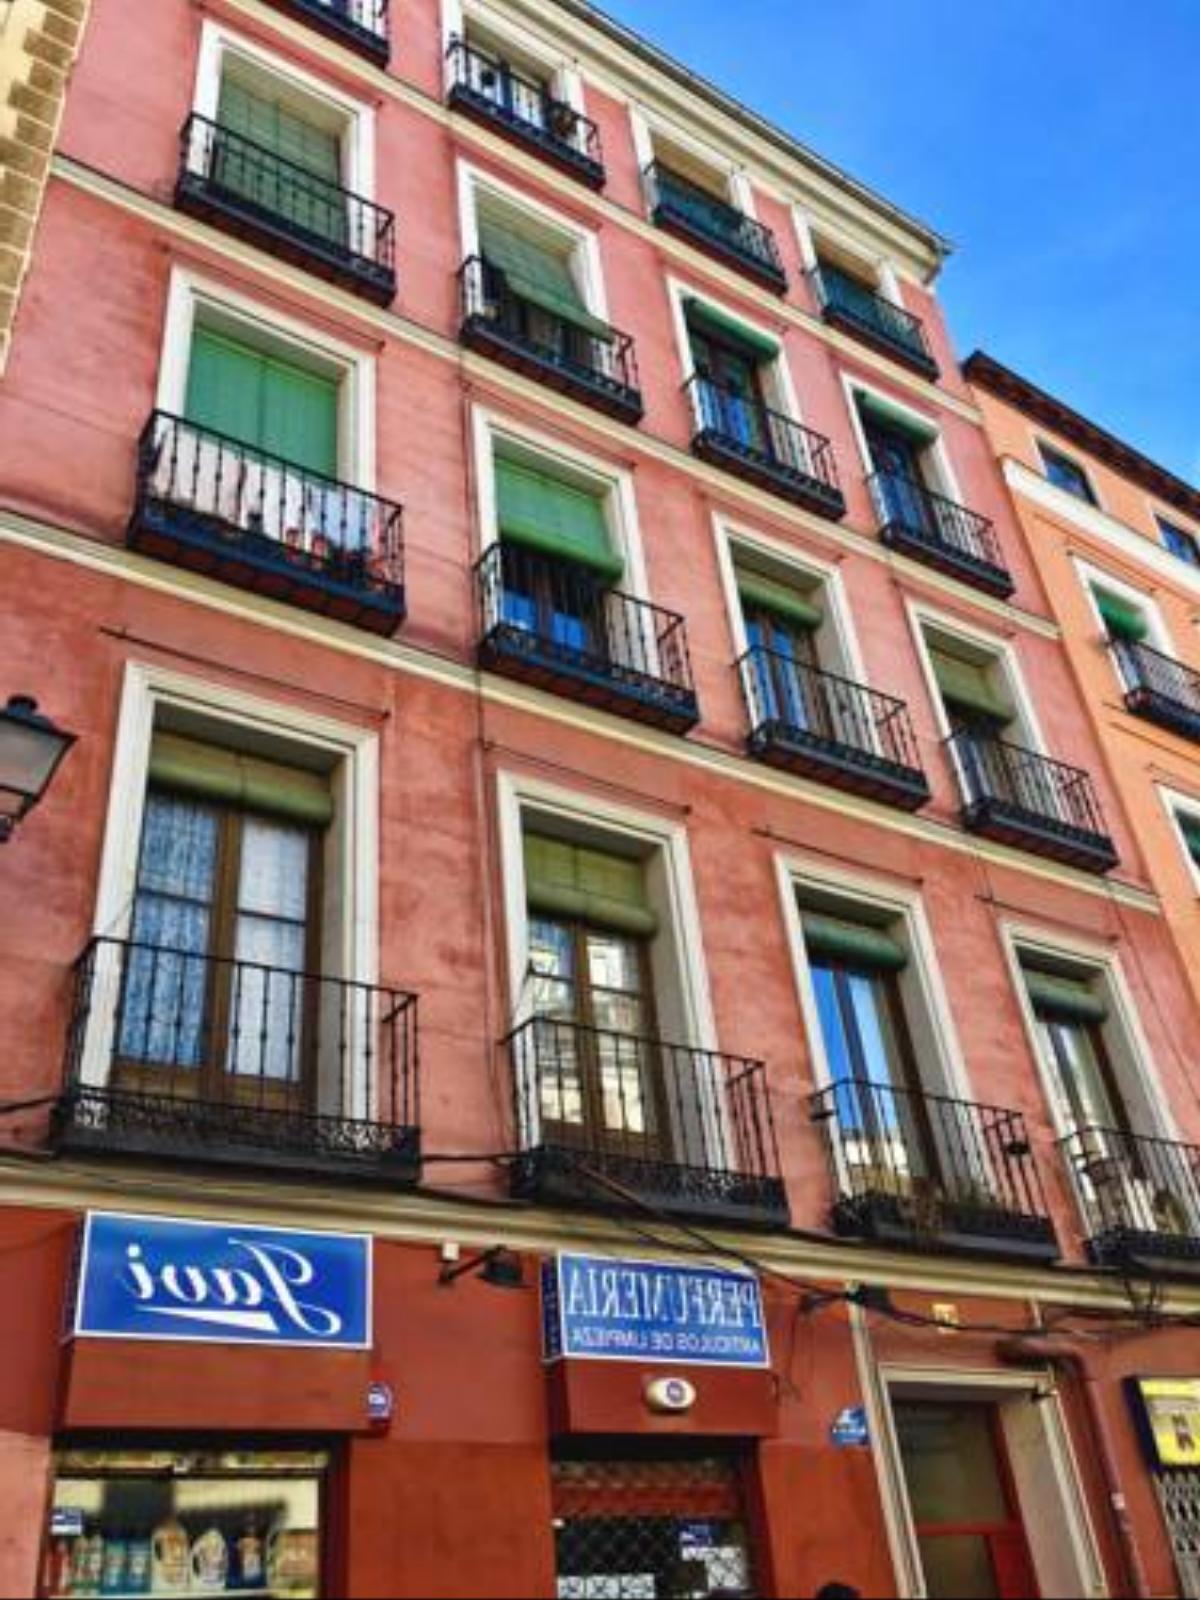 COZY&COMFY @ OLD MADRID Hotel Madrid Spain